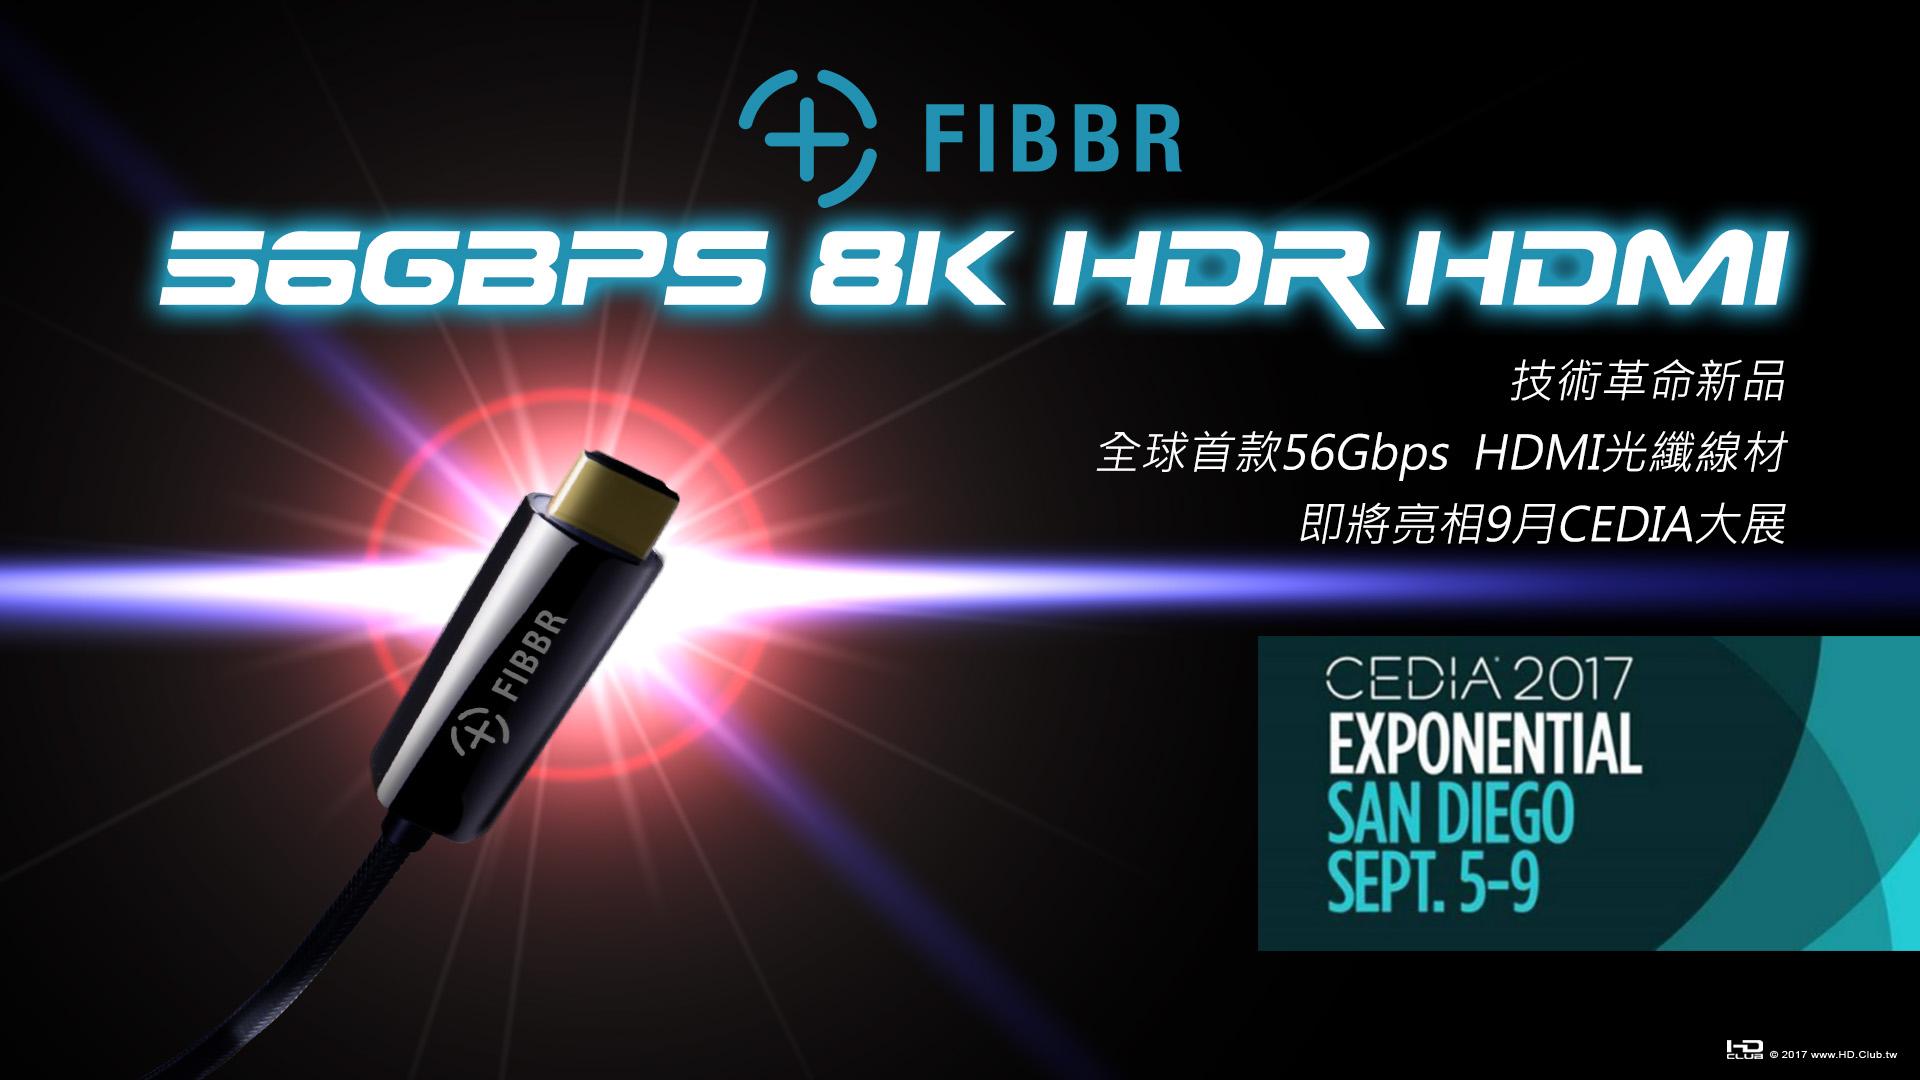 FIBBR-56Gbps.jpg